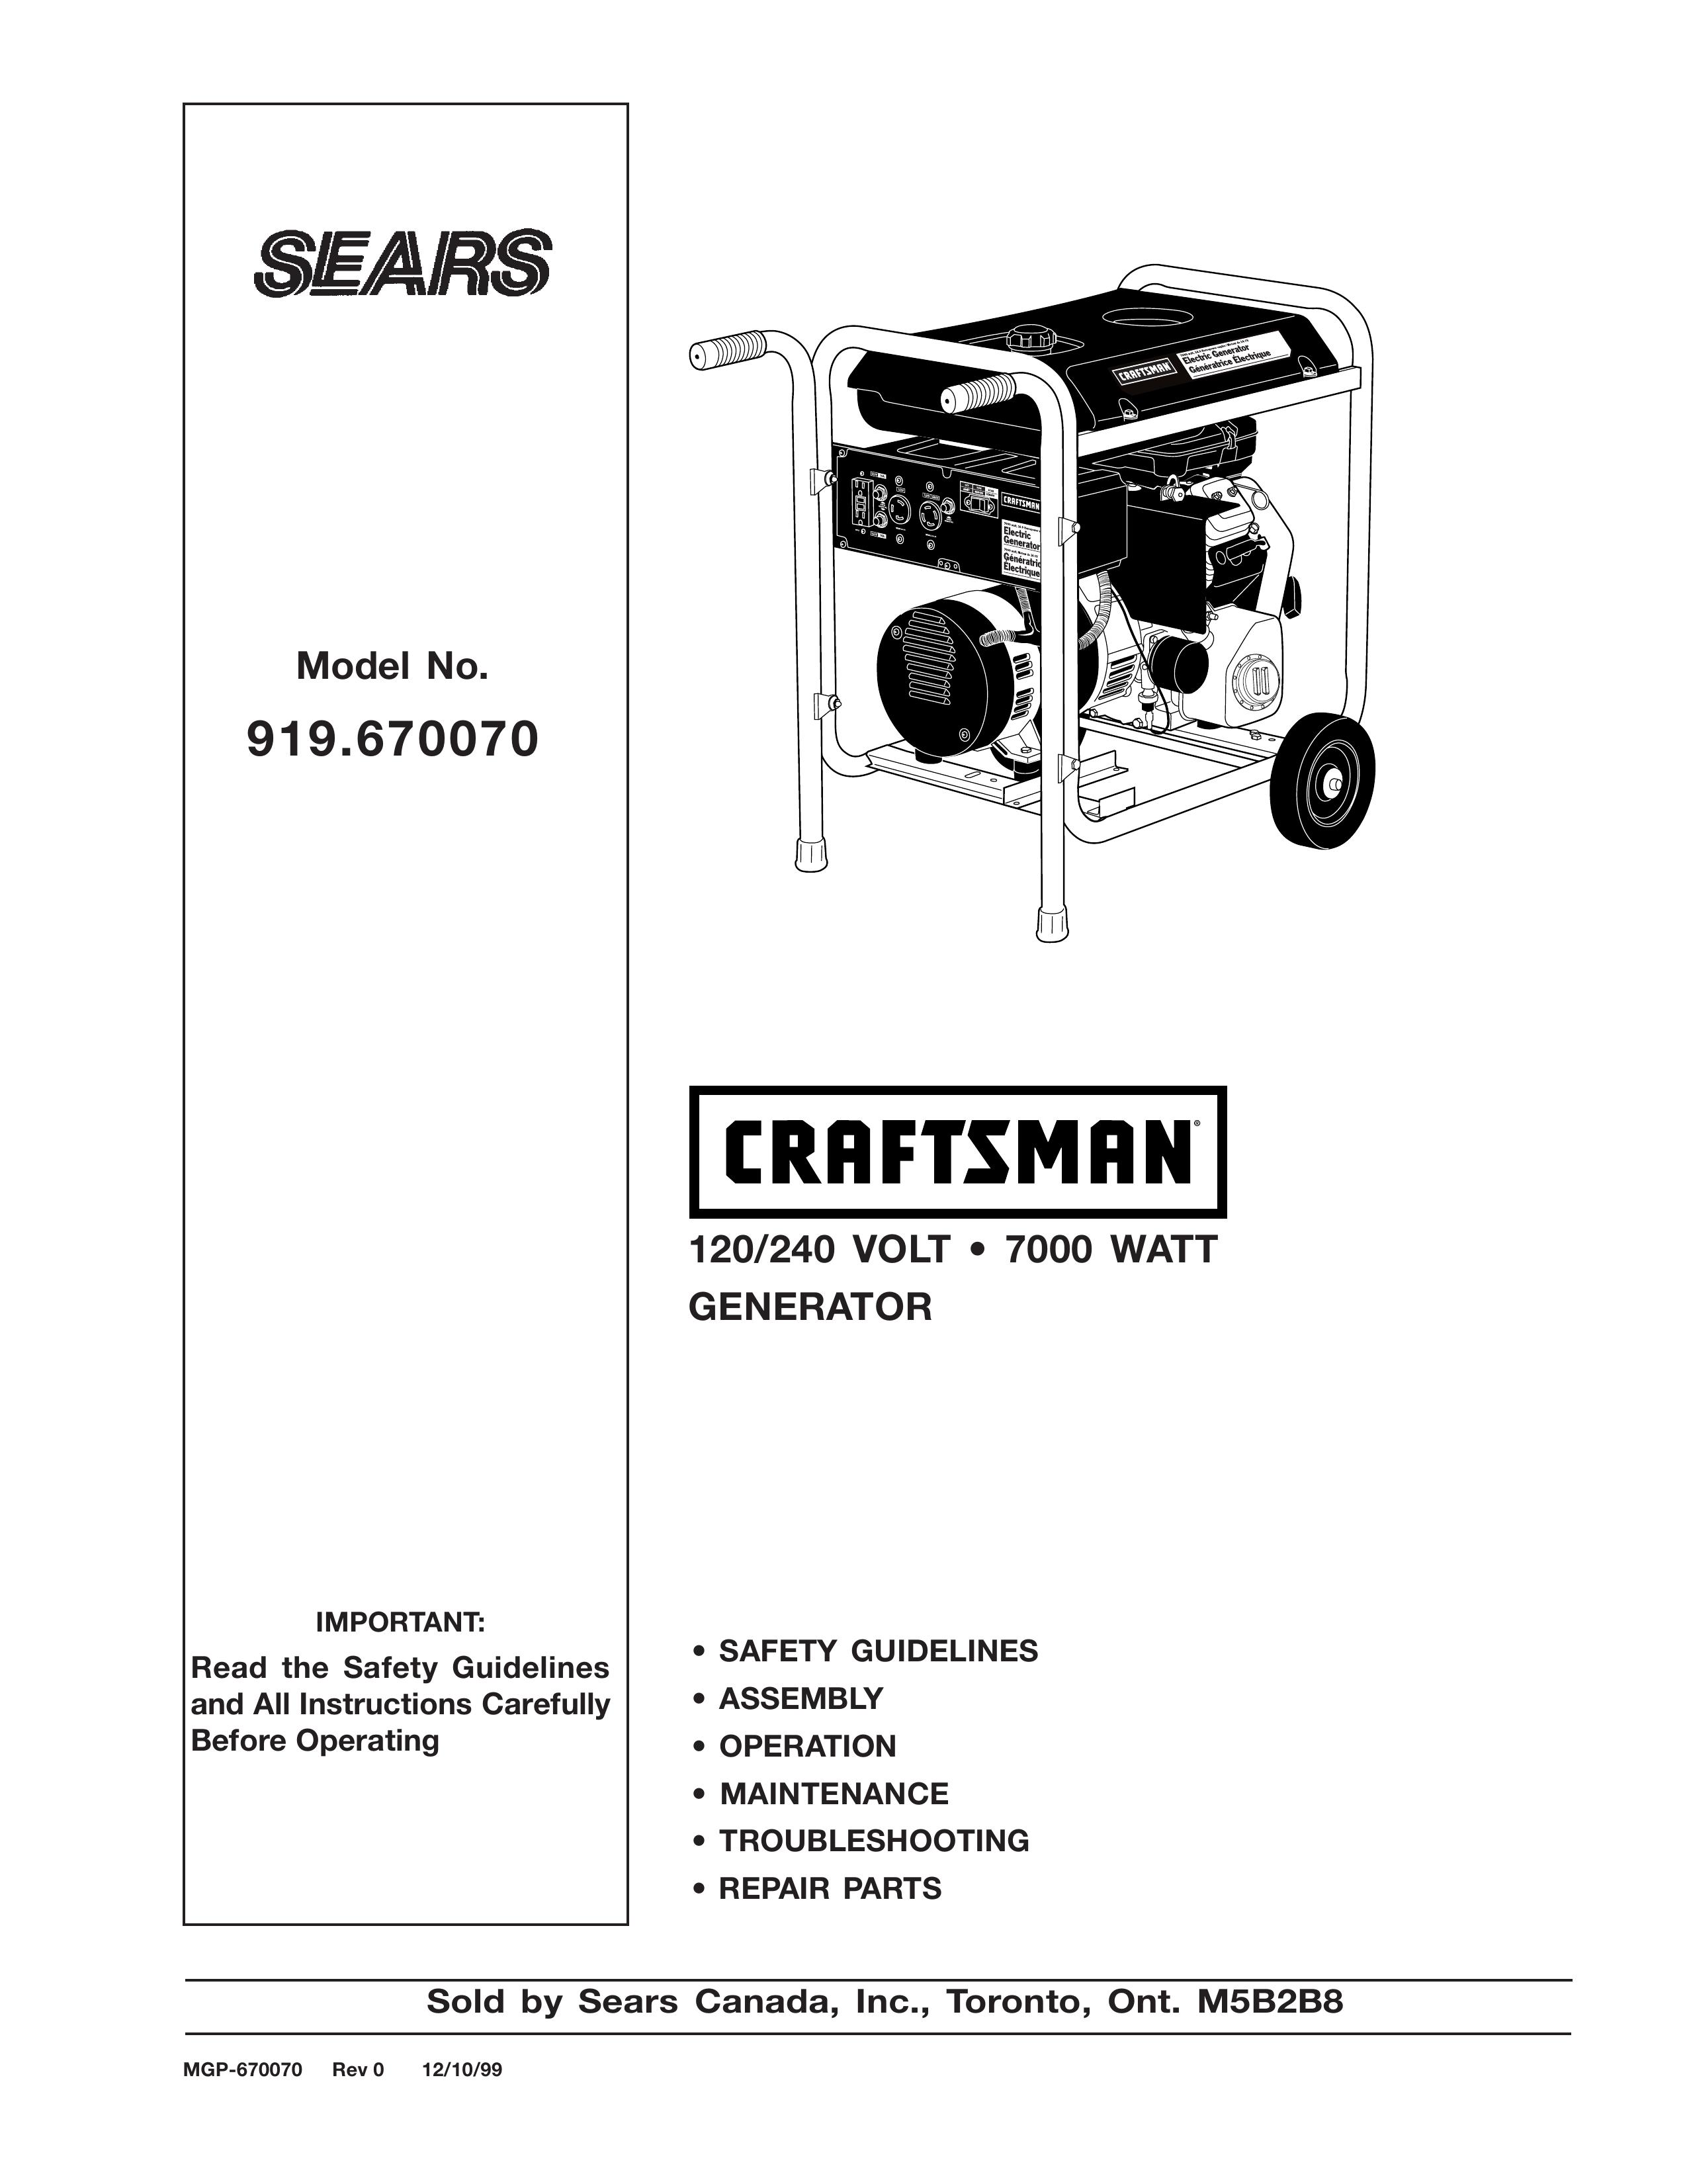 Craftsman MGP-670070 Portable Generator User Manual